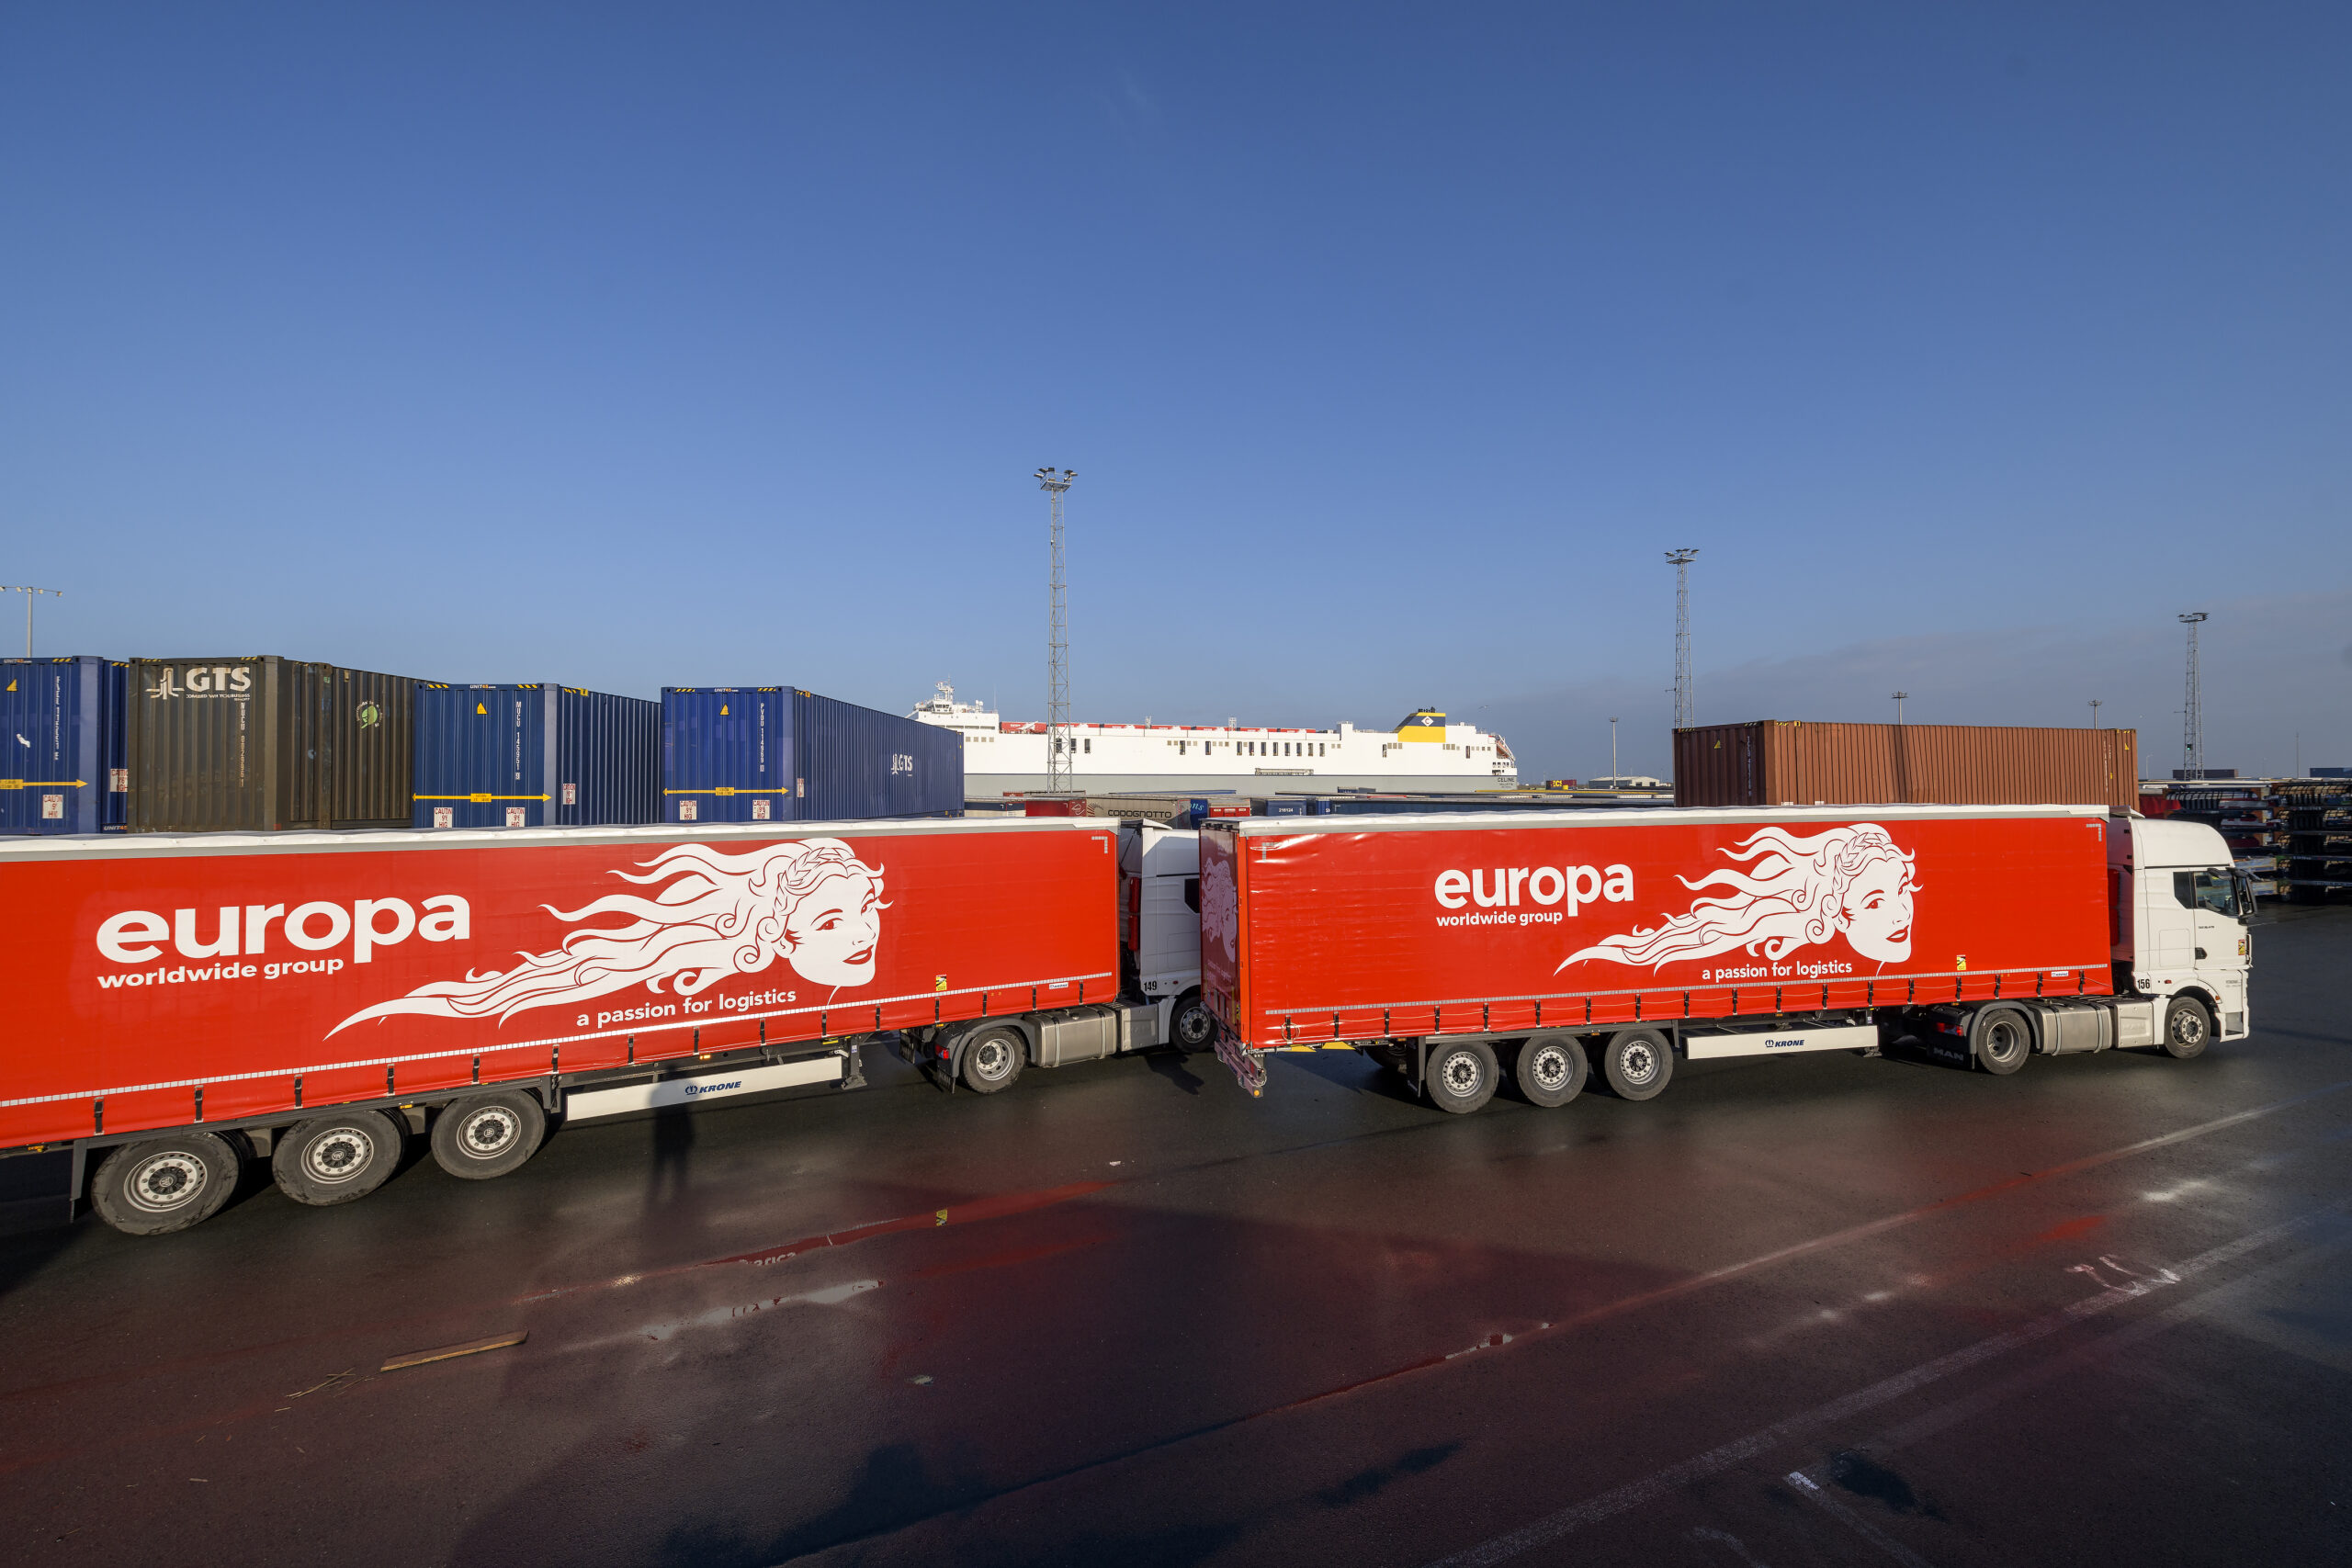 Europa trucks at Belgium port